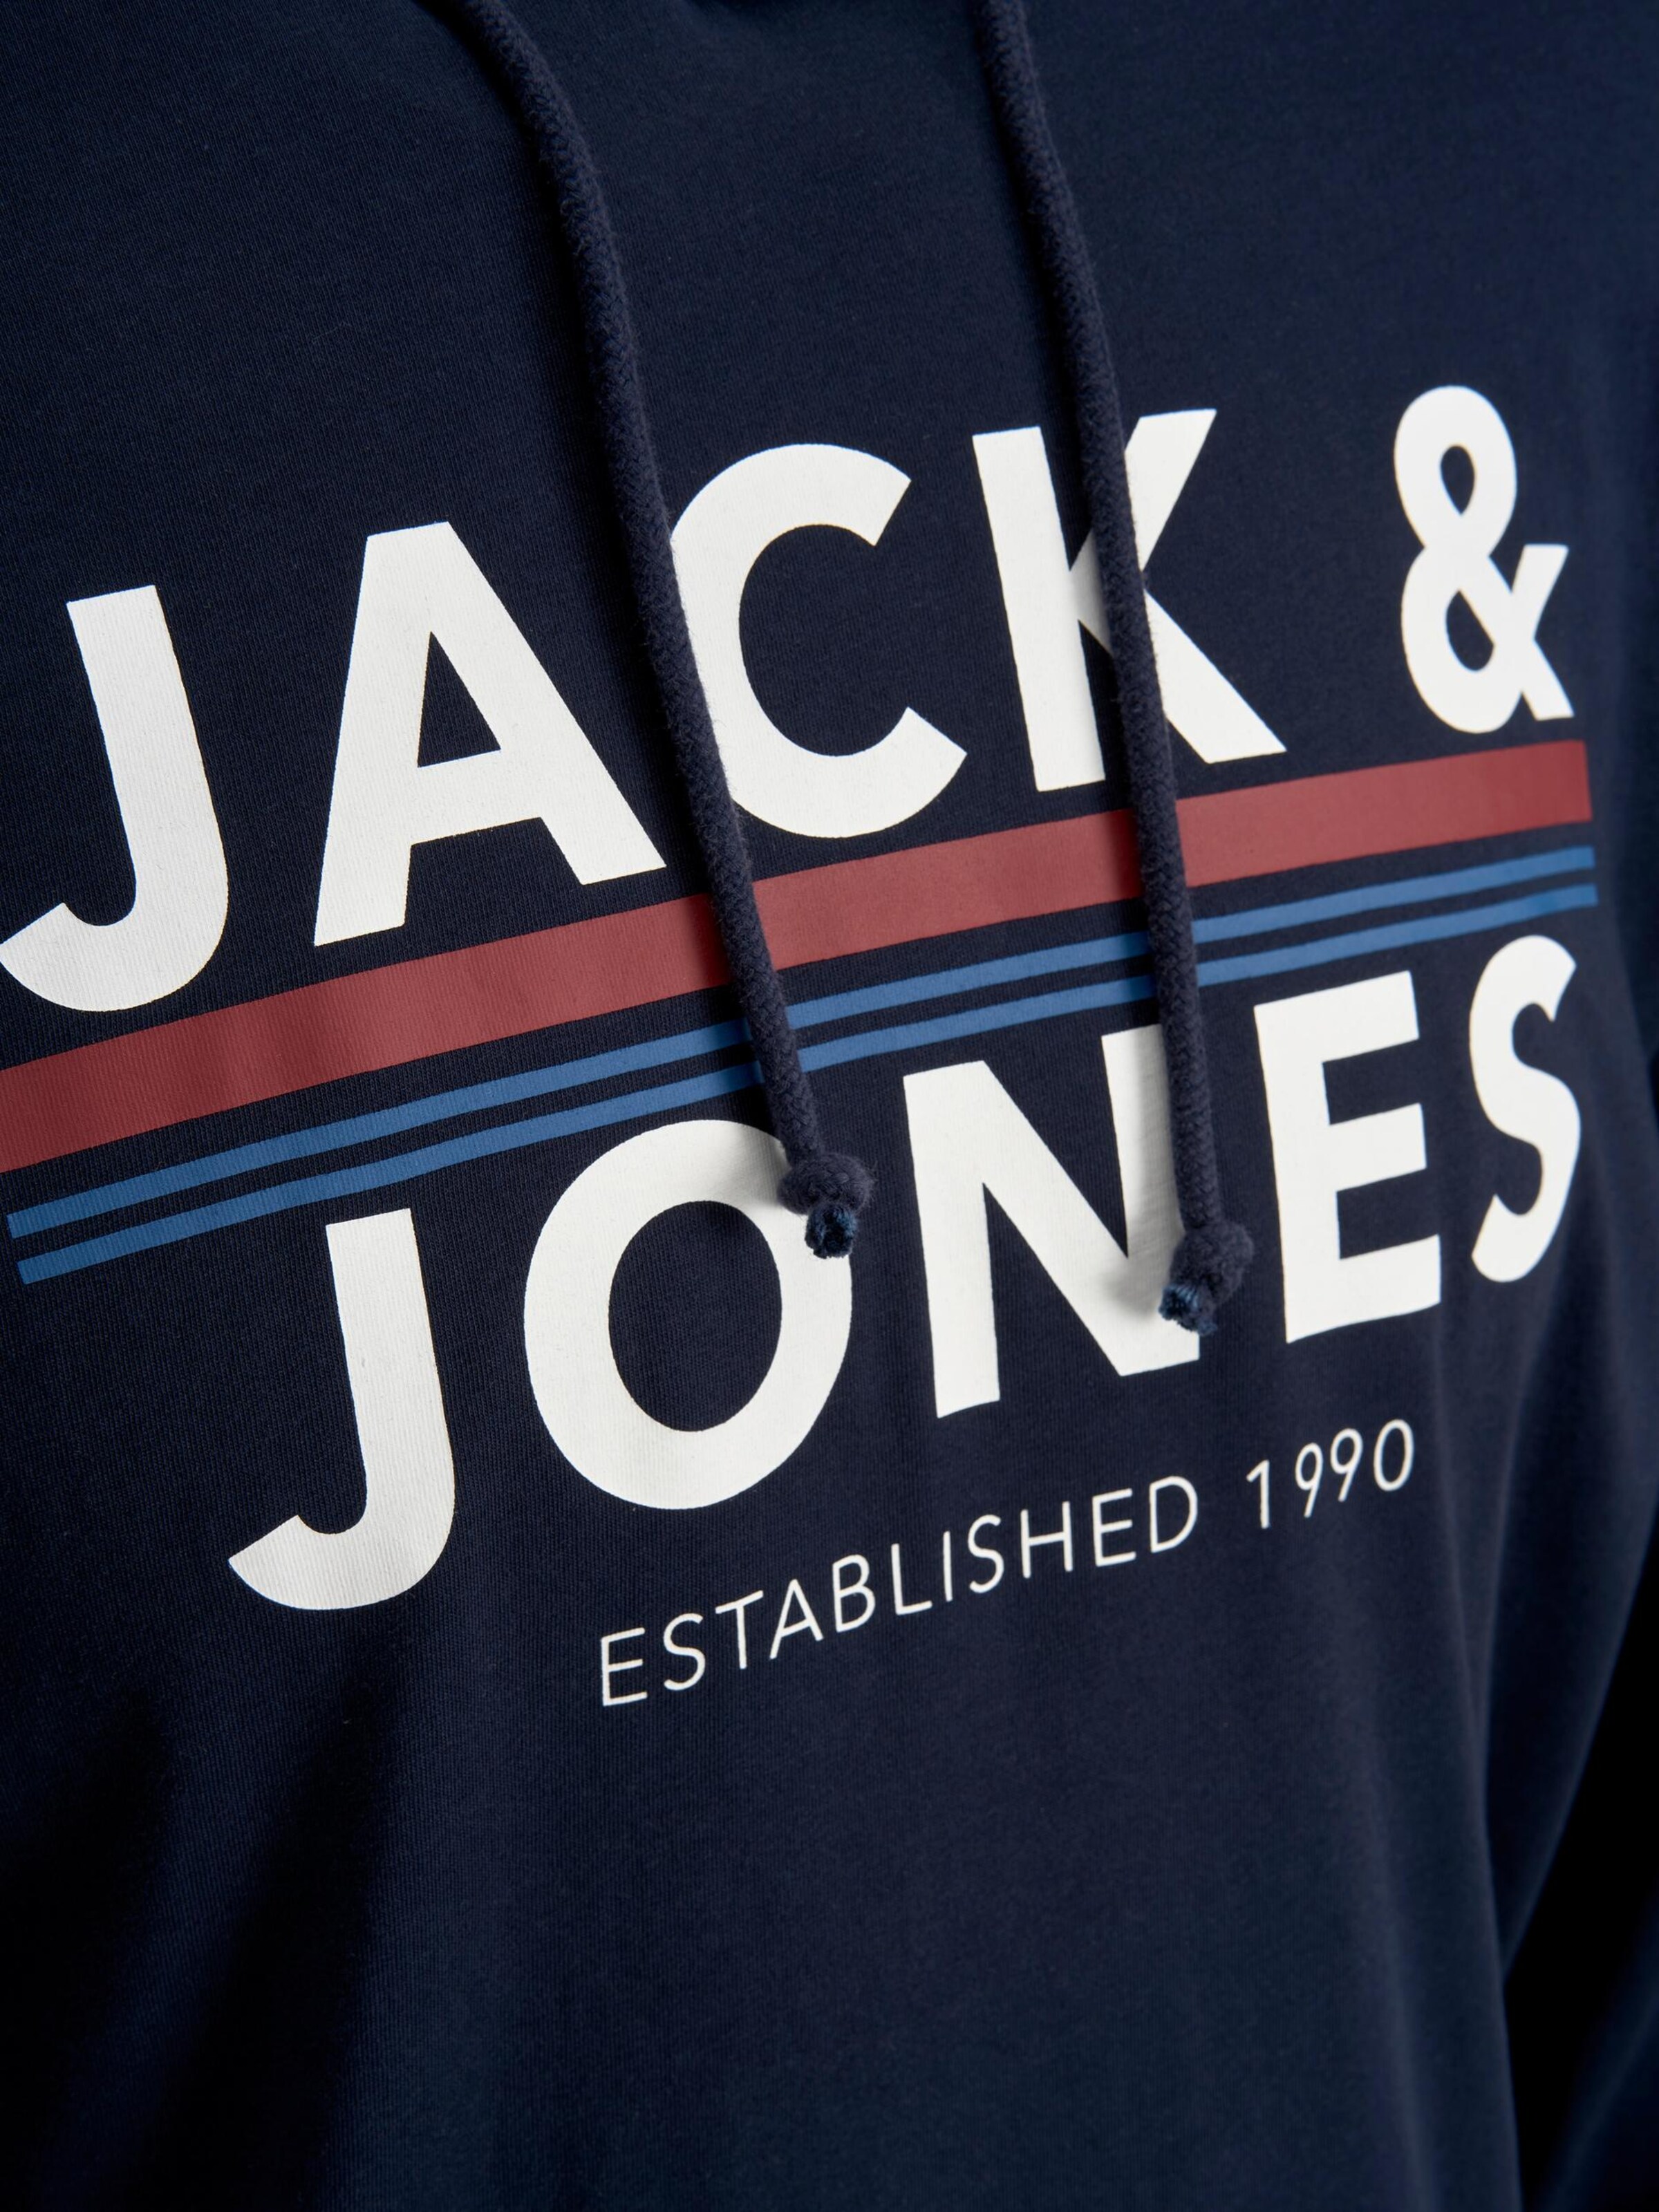 Nouveautés Sweat-shirt Ron JACK & JONES en Bleu Marine, Bleu 